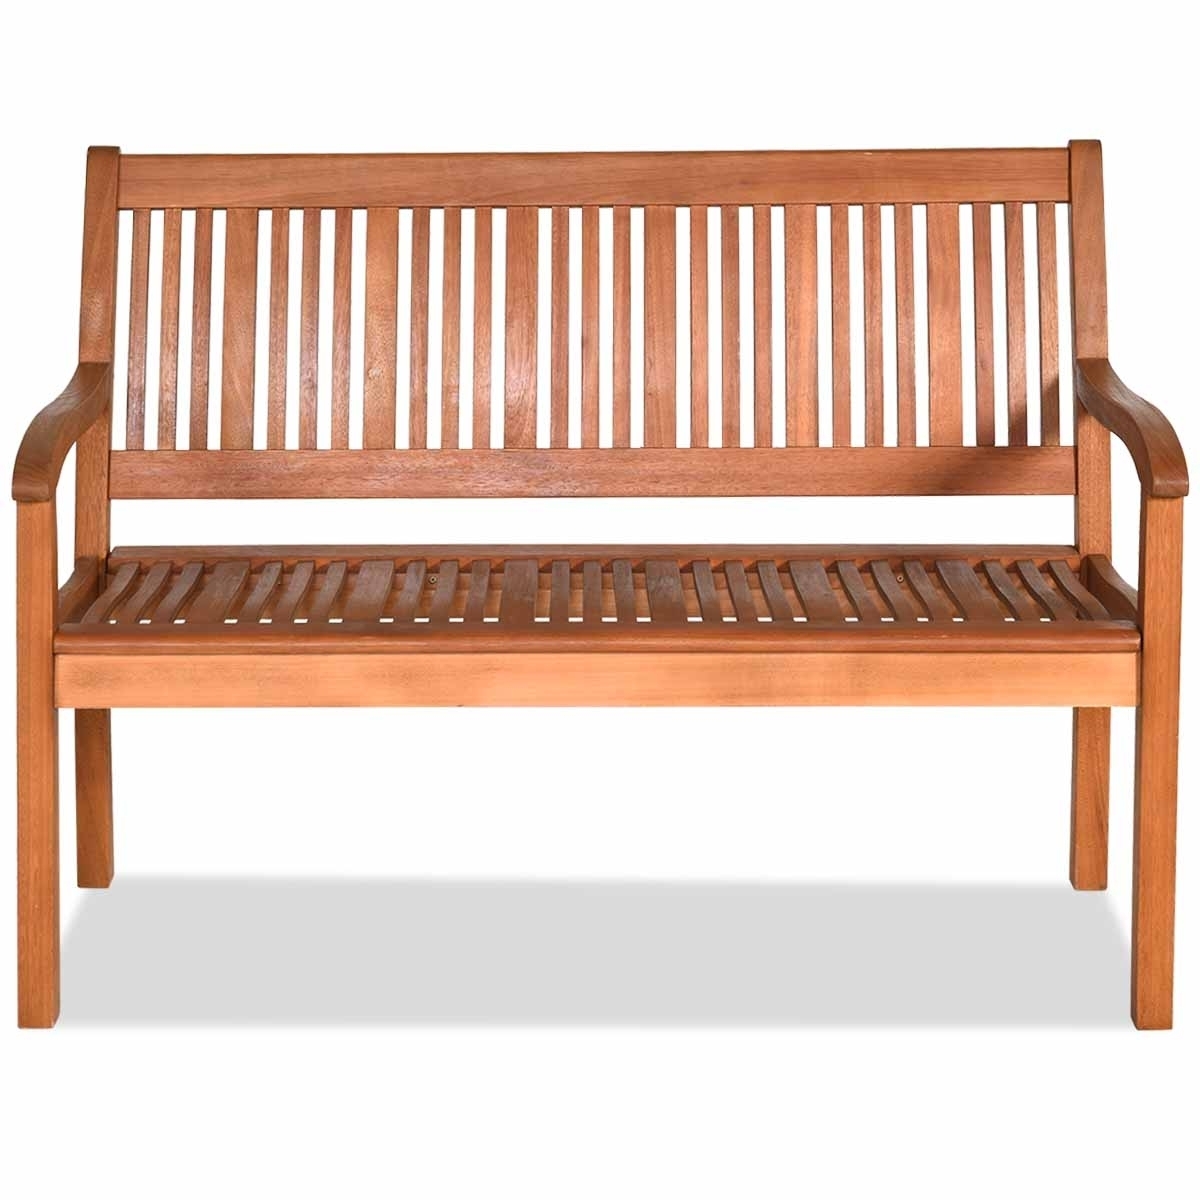 50'' Wooden Bench Loveseat Patio Garden Outdoor W/ Armrest & Backrest